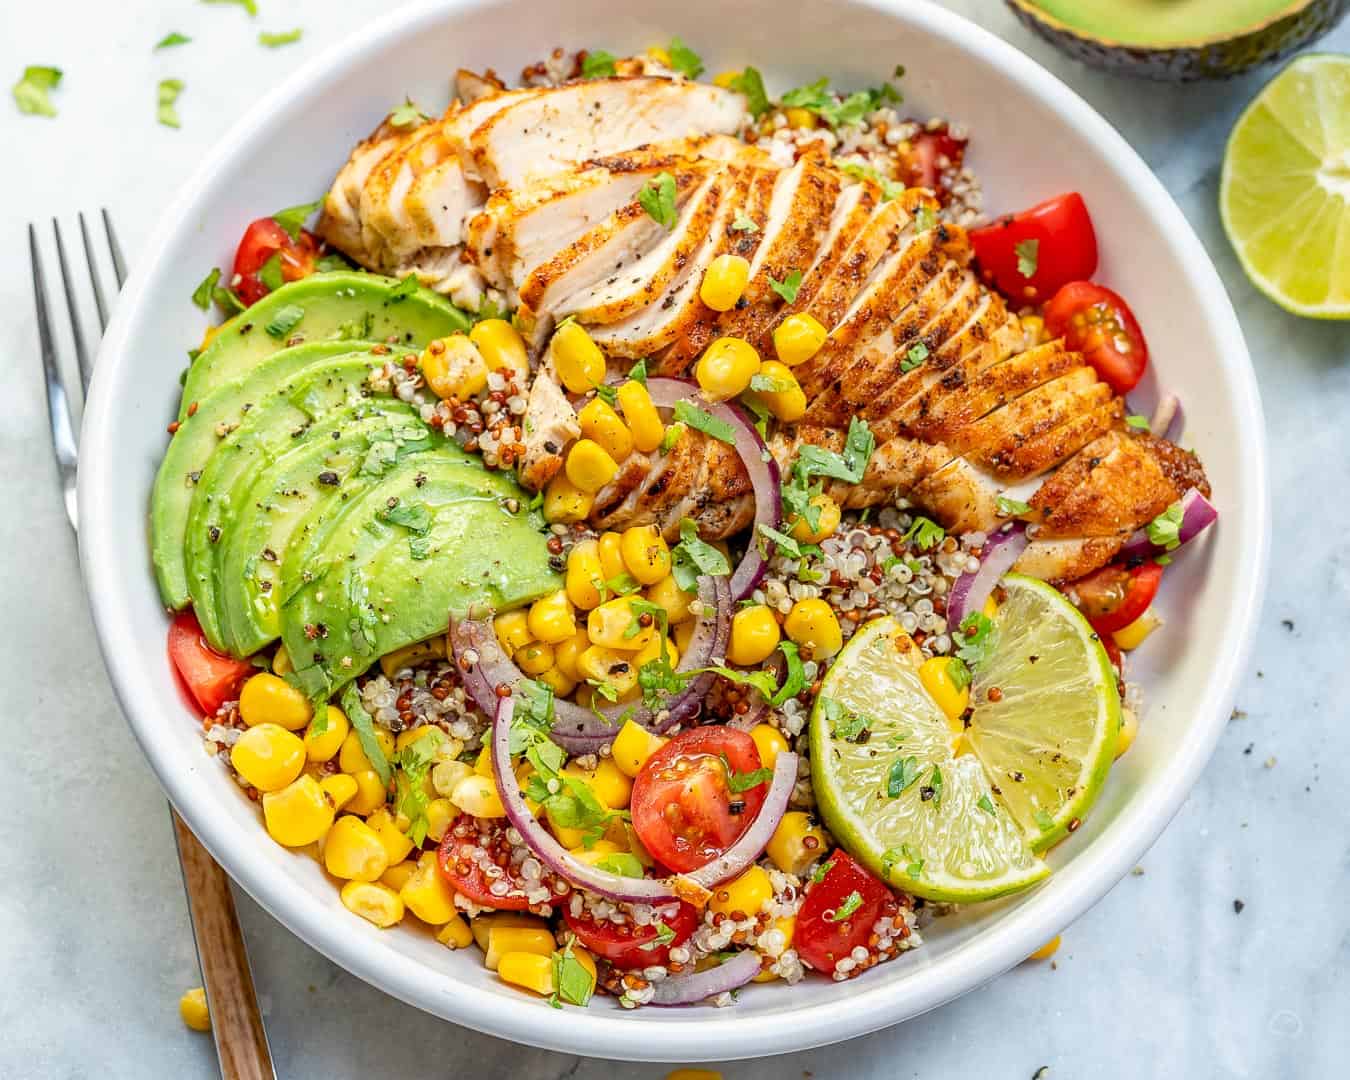 https://healthyfitnessmeals.com/wp-content/uploads/2018/09/Mexican-grilled-chicken-bowls-7.jpg